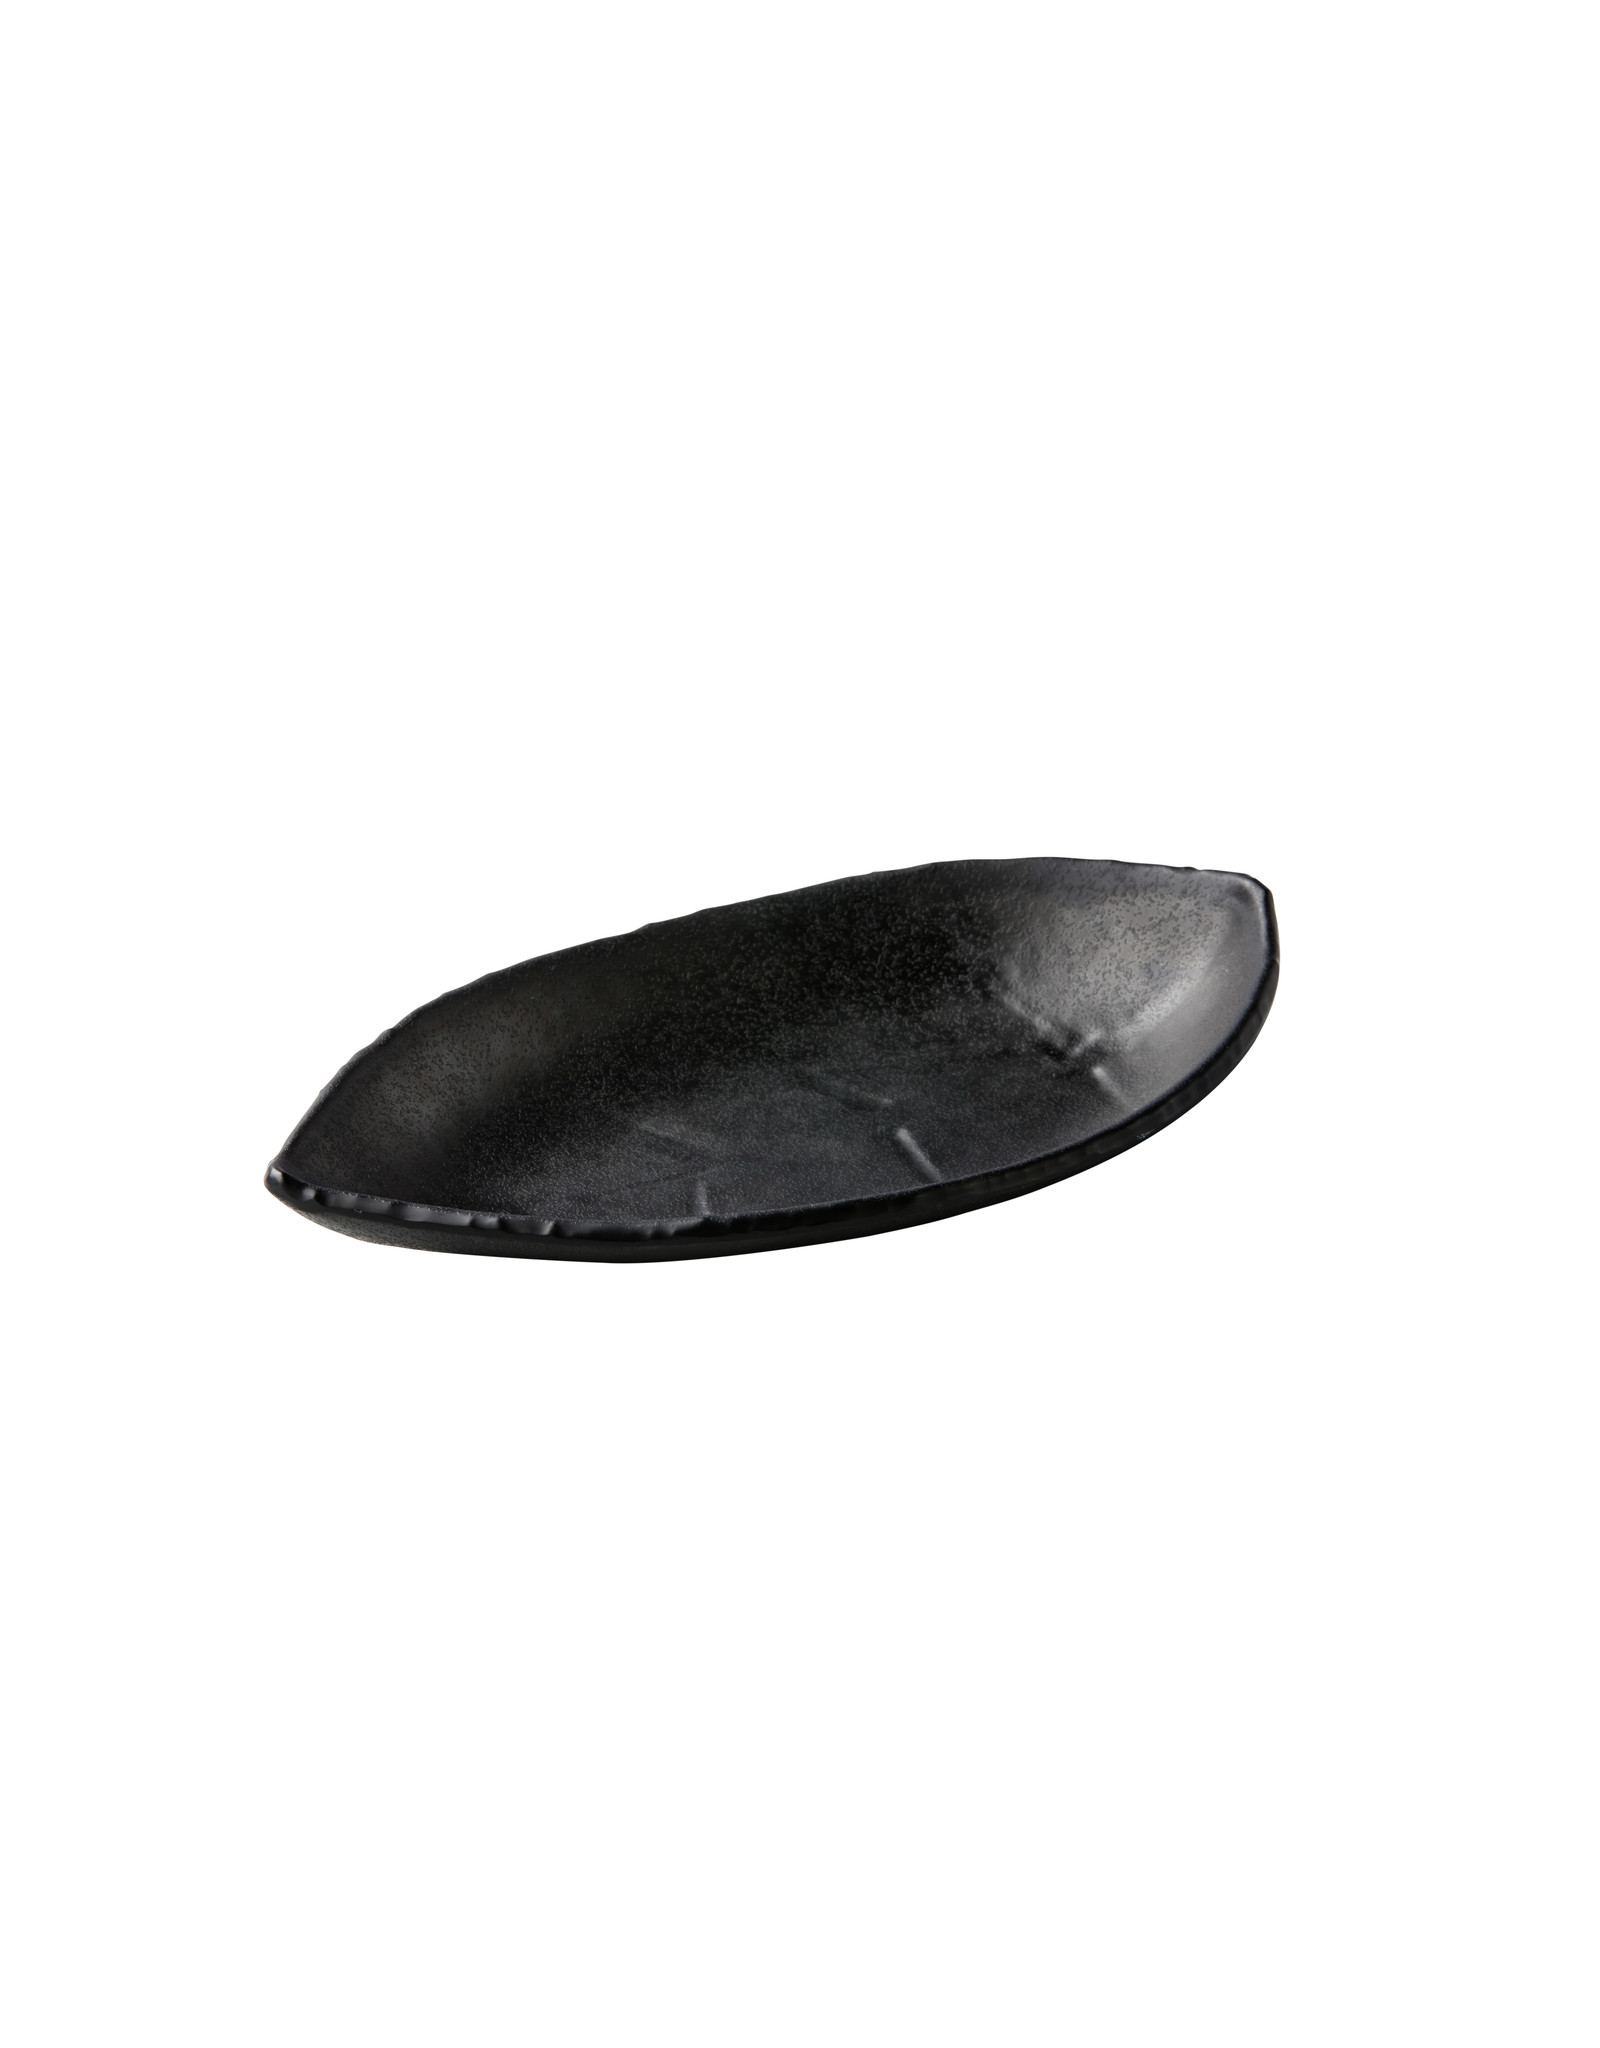 Stylepoint leaf-shaped dish black 22x13cm